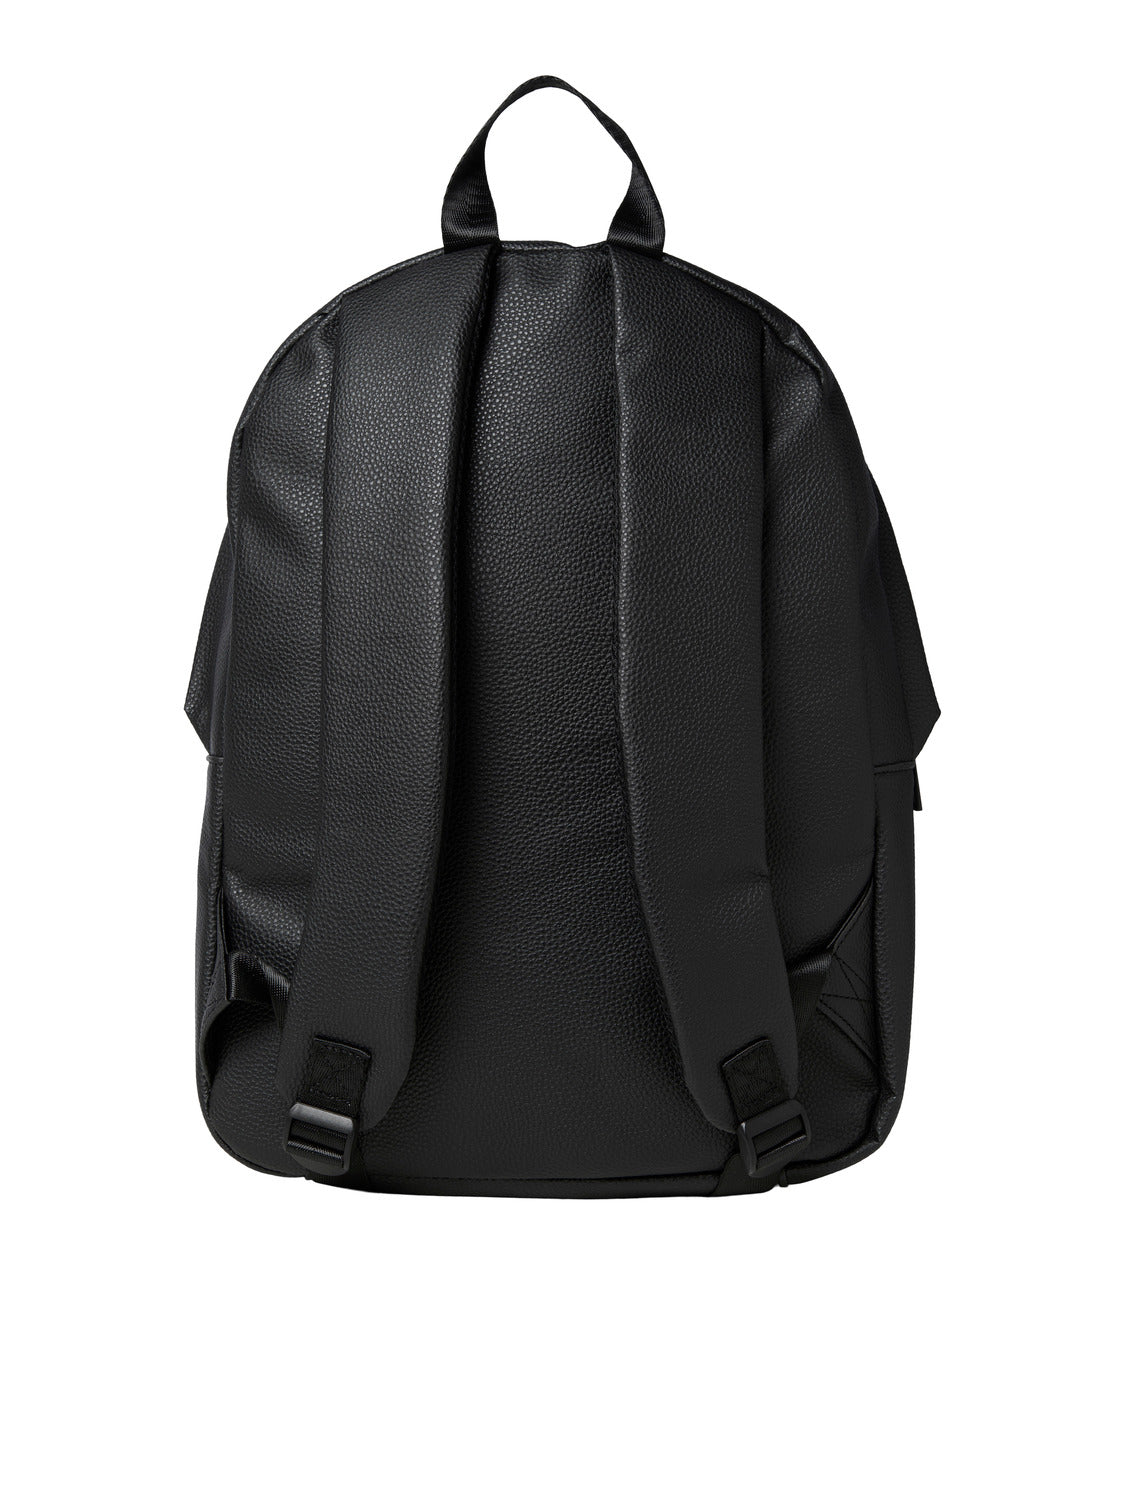 JACALEX Travel Bag - Black